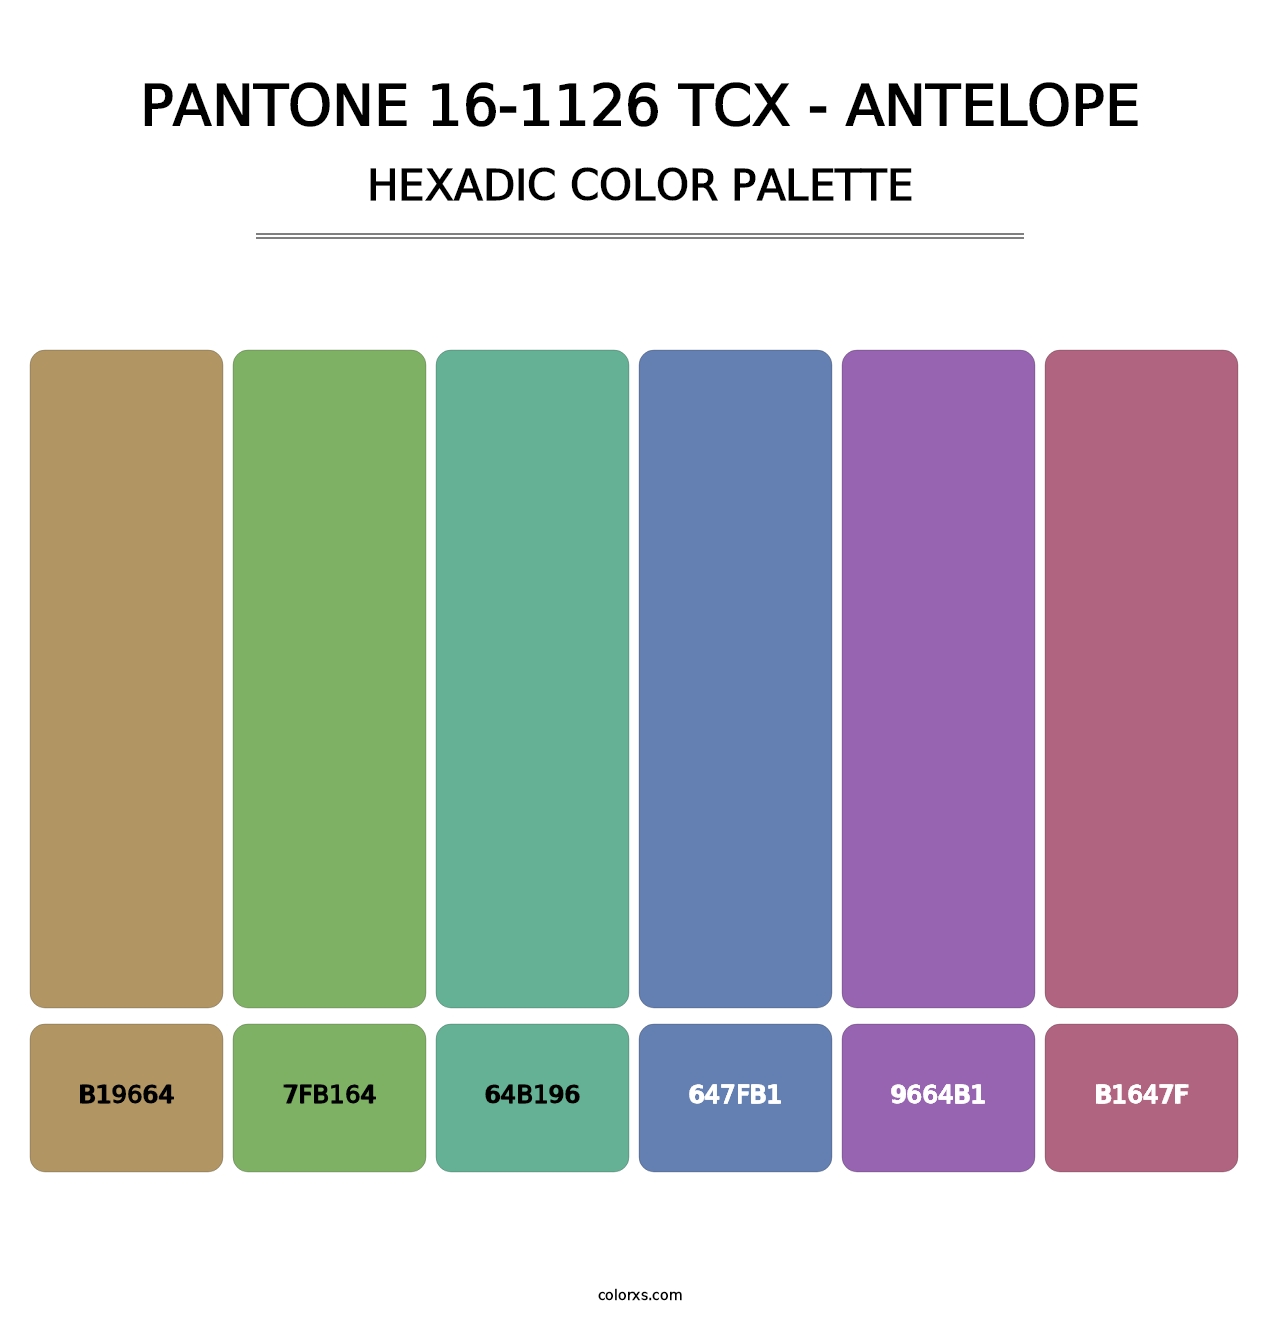 PANTONE 16-1126 TCX - Antelope - Hexadic Color Palette